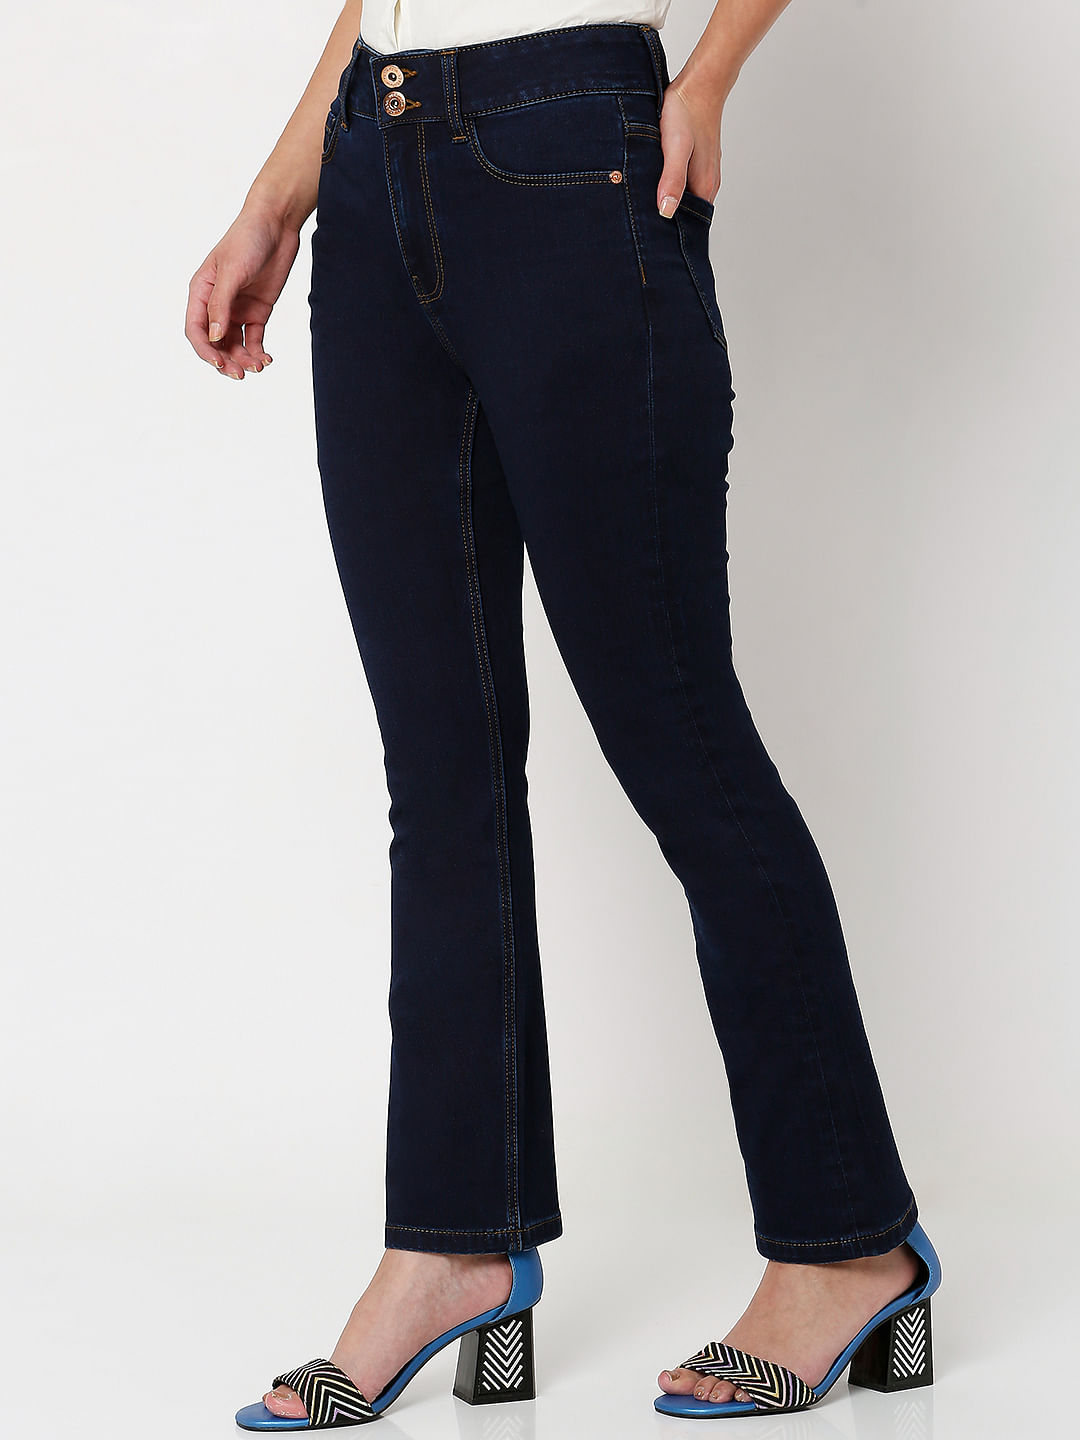 PajamaJeans® High-Waist Bootcut Jeans in Bootcut | PajamaJeans